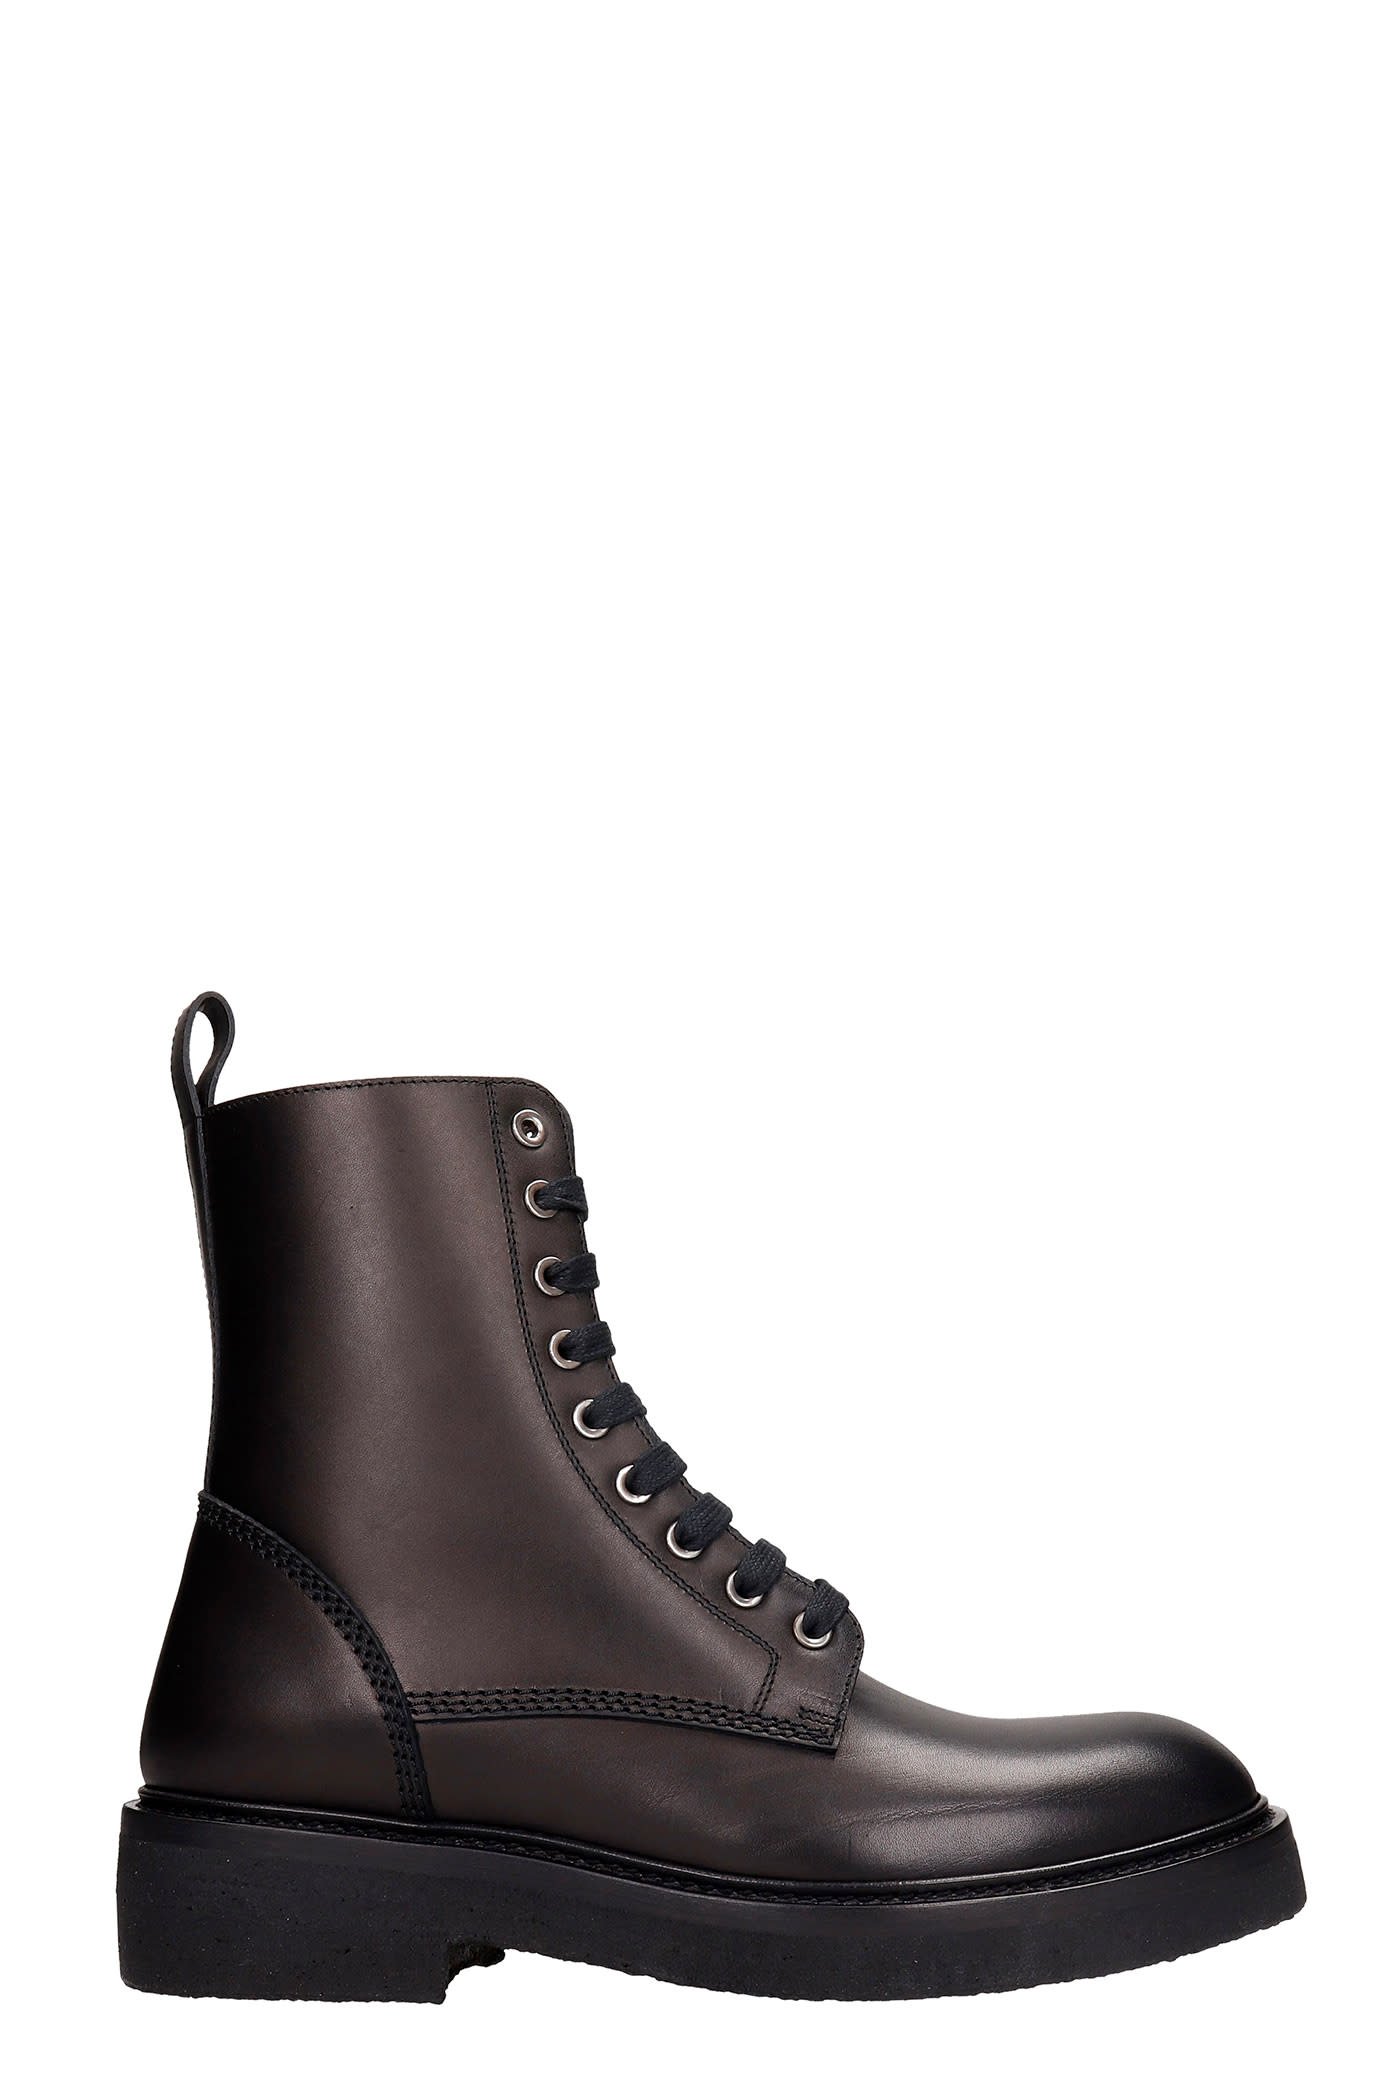 Amiri Combat Boots In Black Leather